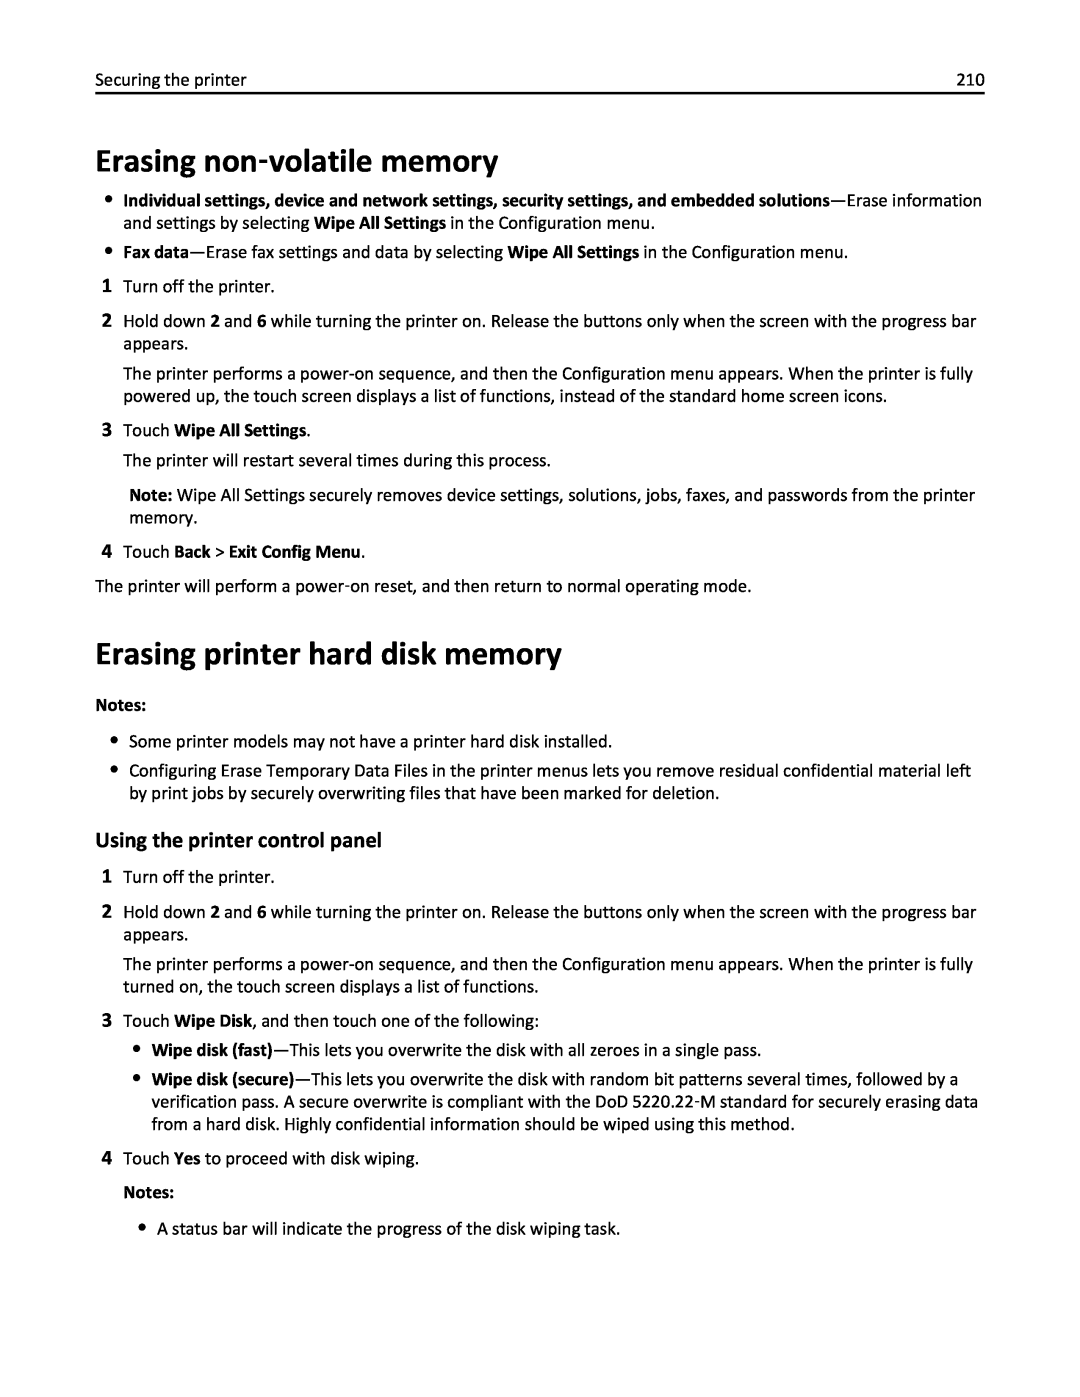 Lexmark 470, 35S5701, 670 Erasing non‑volatile memory, Erasing printer hard disk memory, Using the printer control panel 